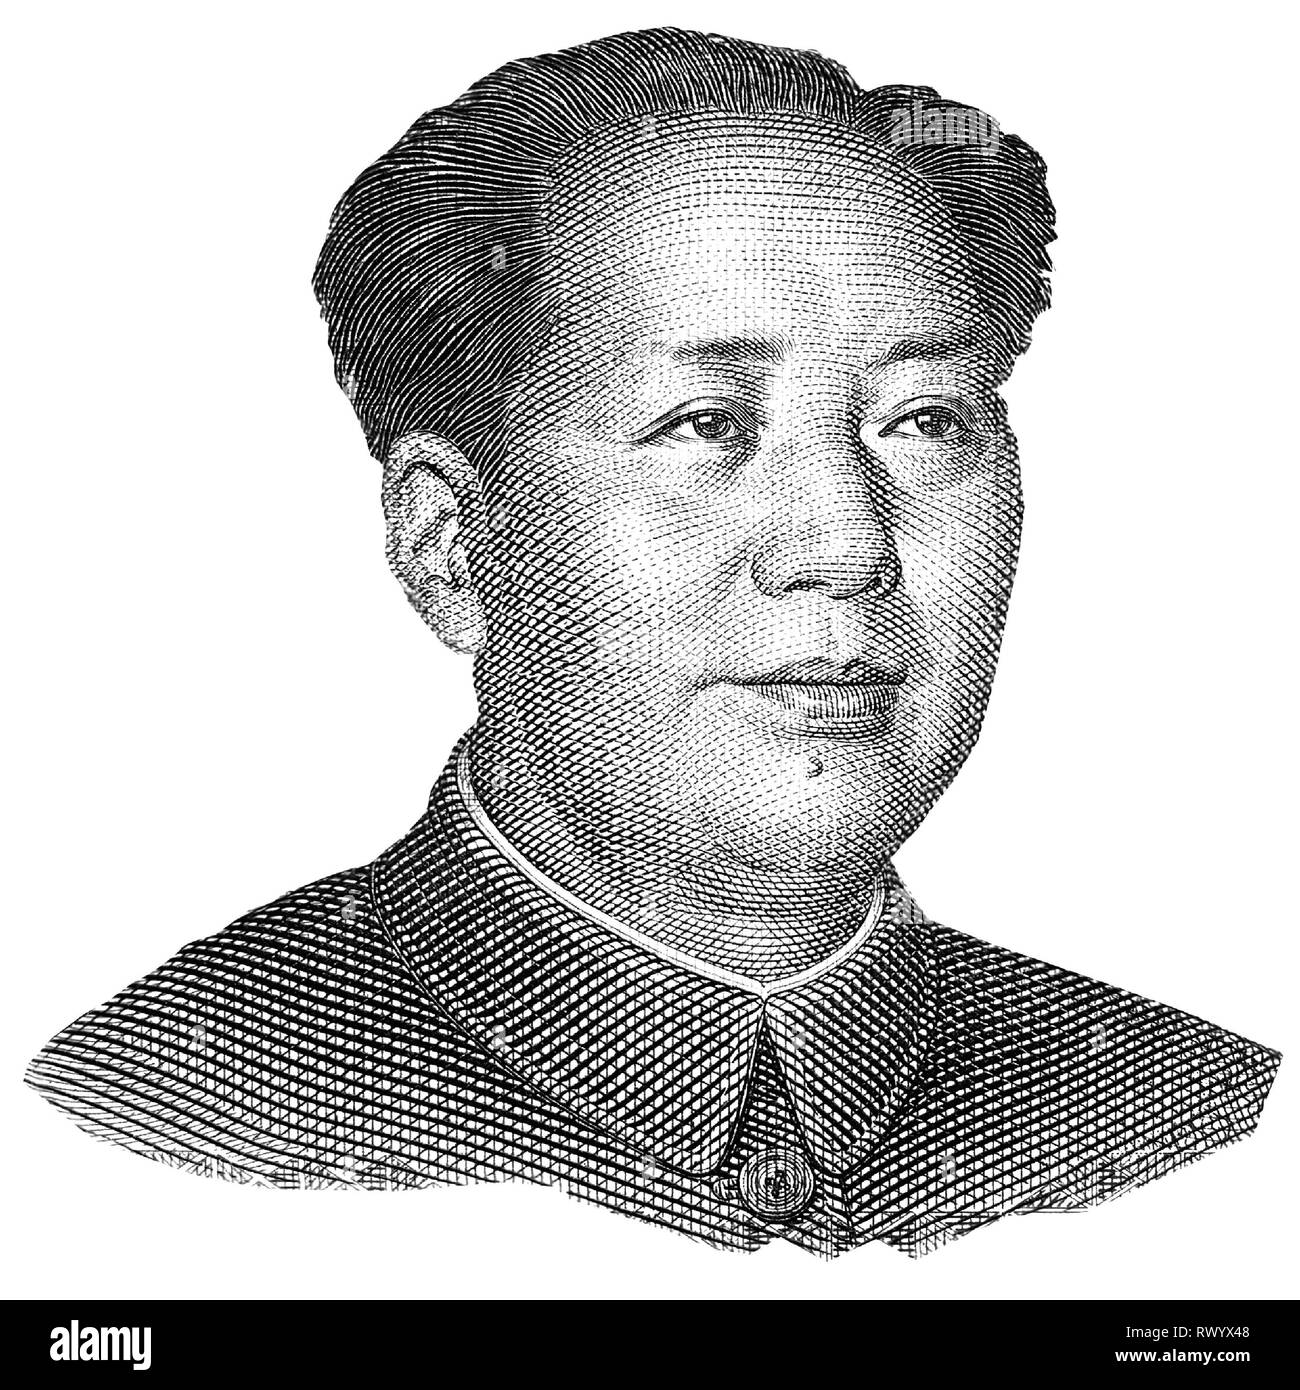 chairman-mao-zedong-portrait-illustration-cut-out-stock-images